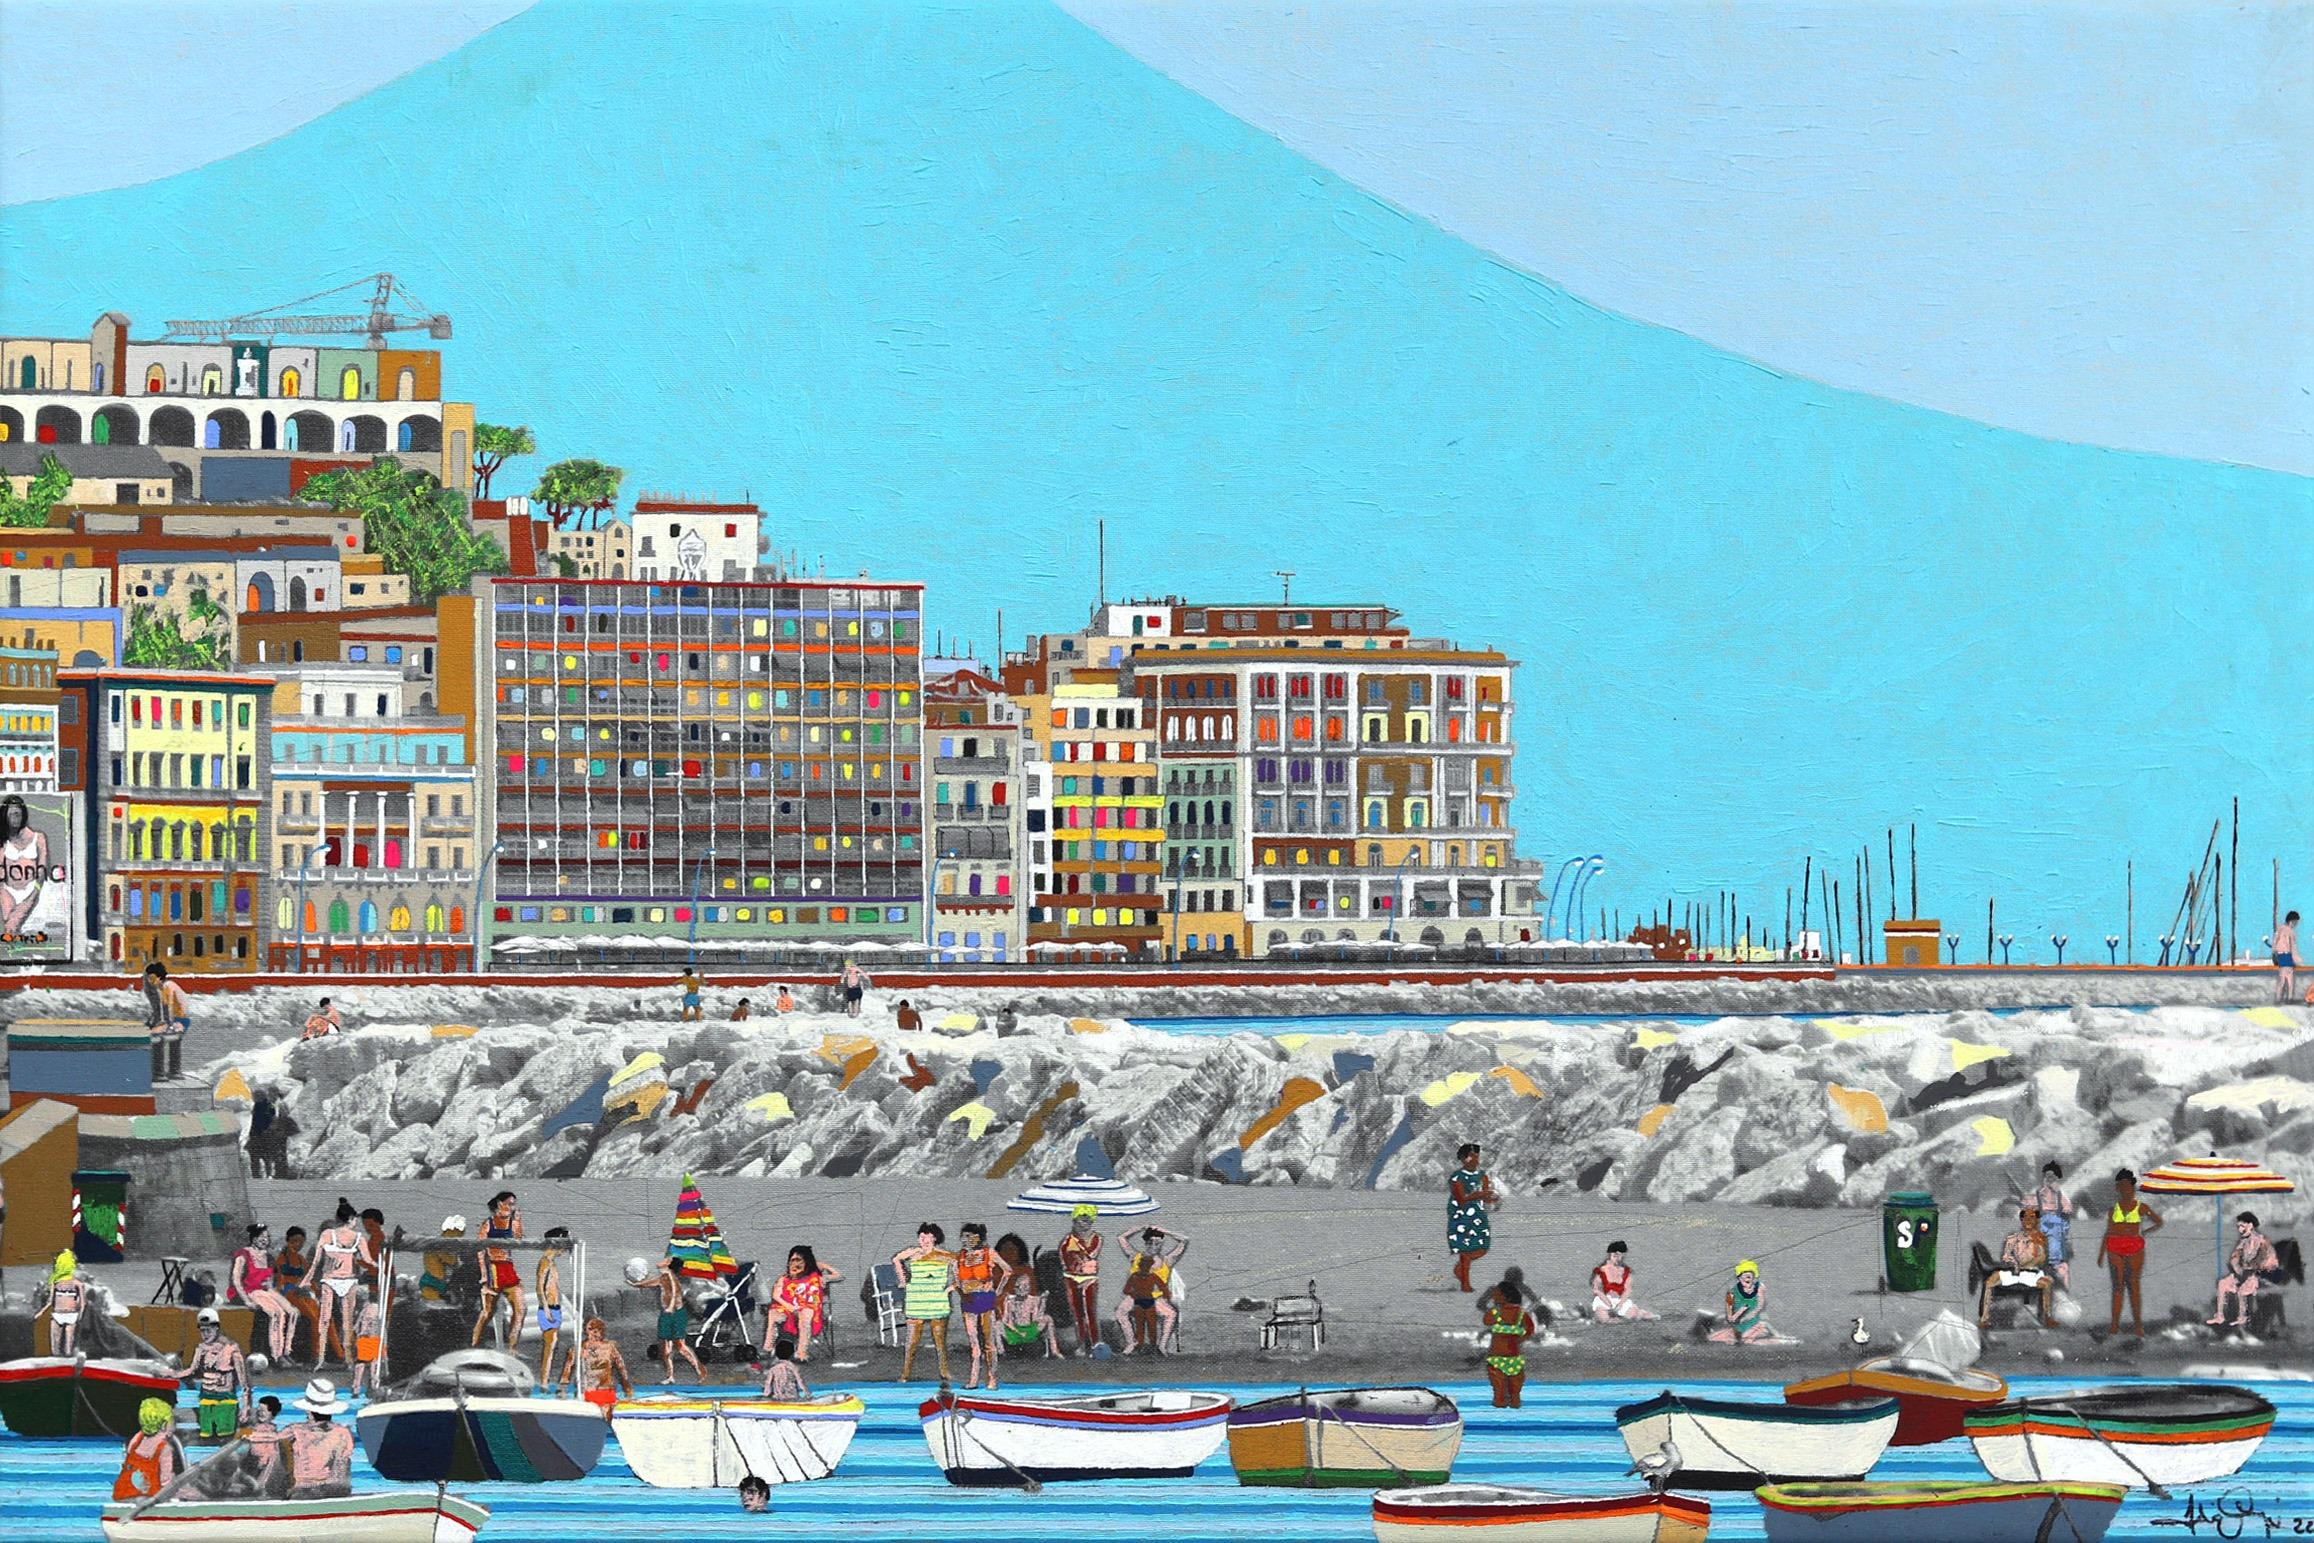 Napoli - Original Landscape Colorful Authentic Environment Painting - Mixed Media Art by Fabio Coruzzi